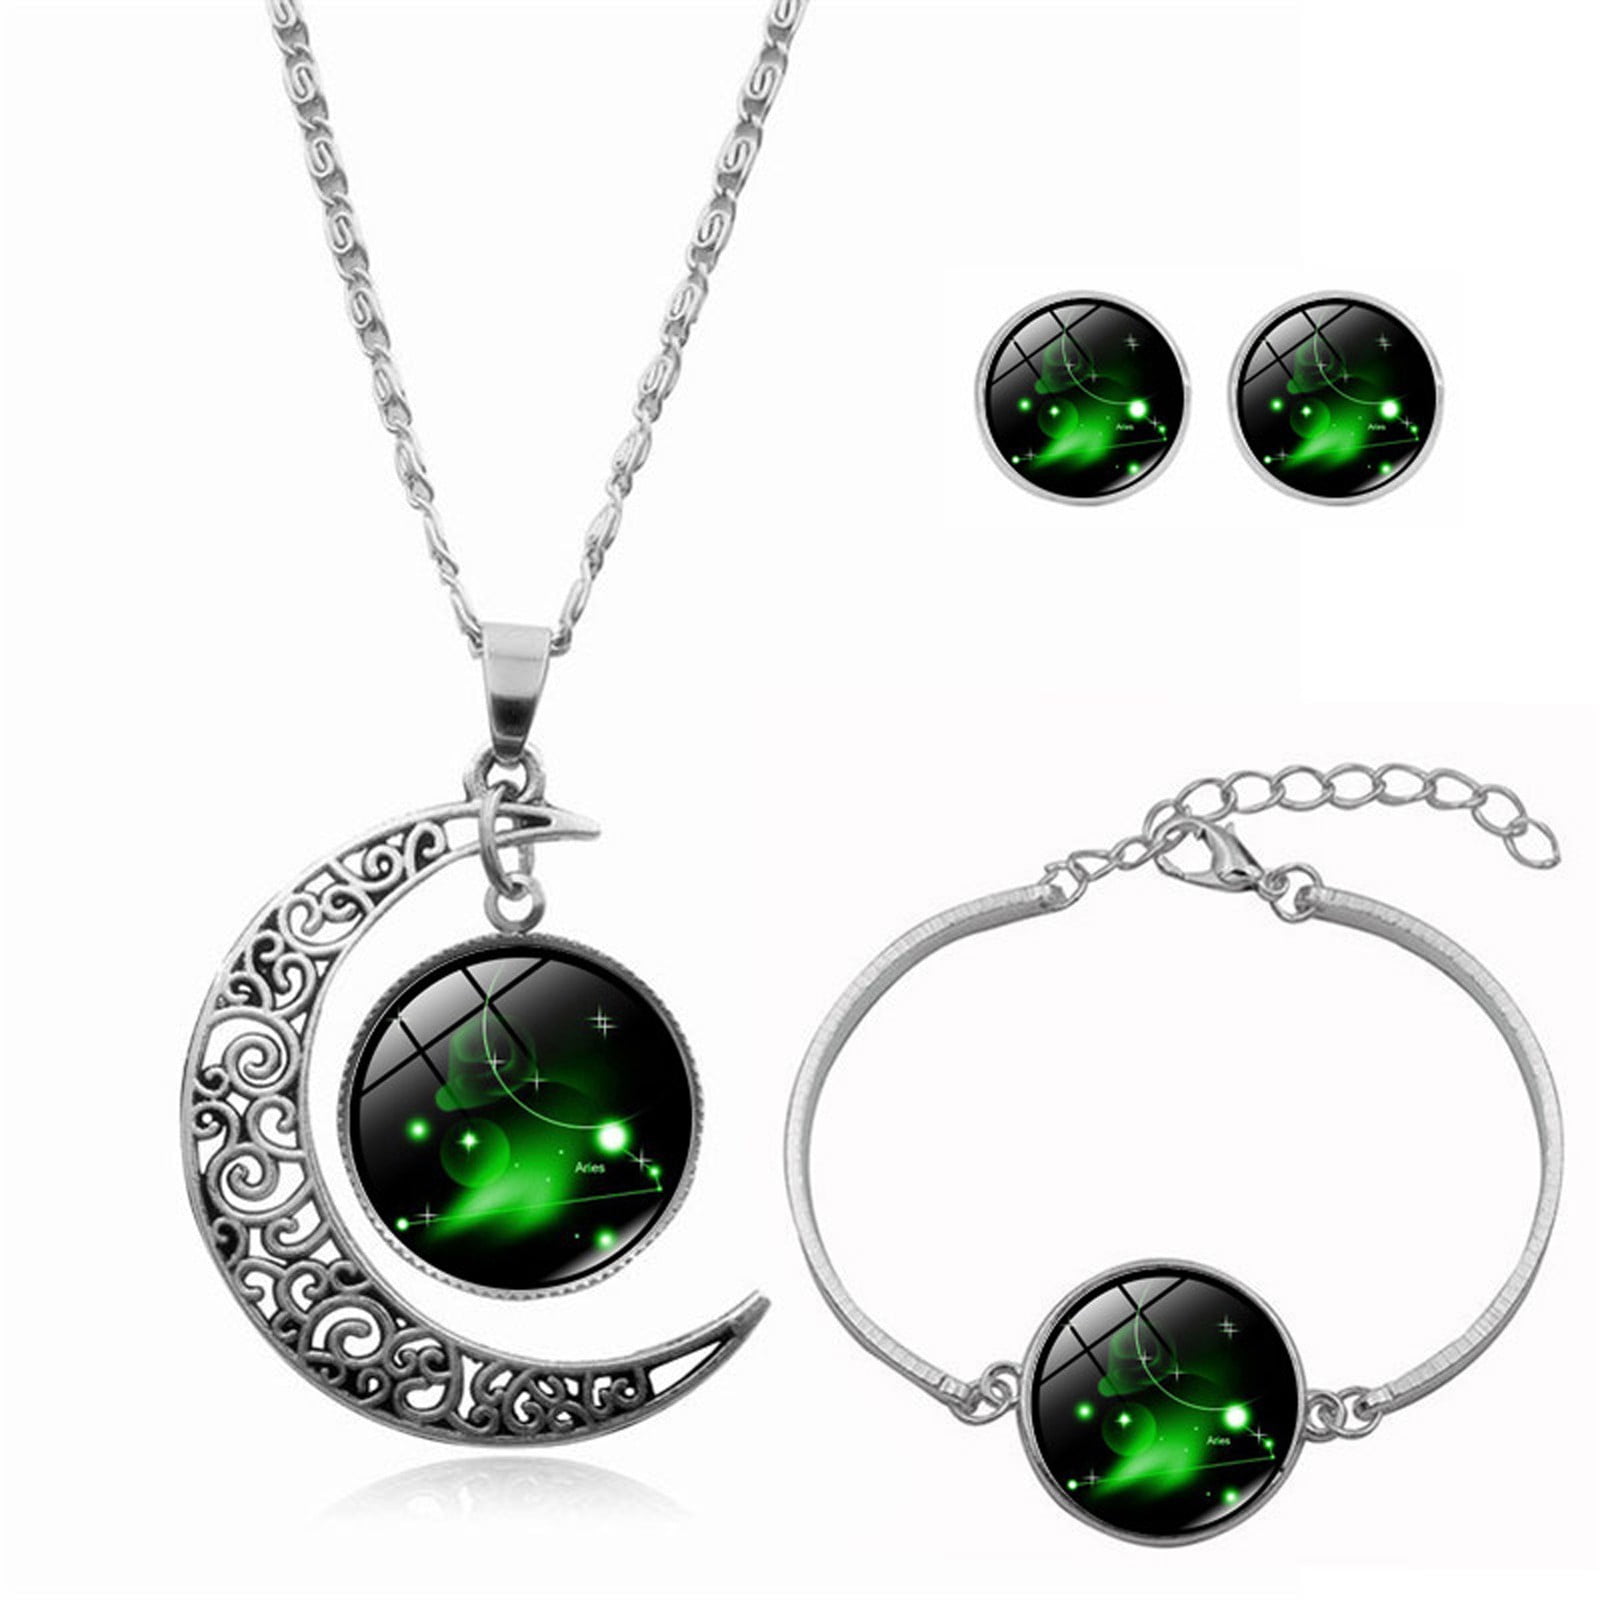 12 Necklace Earring Bracele Gifts For Mom Present For Women - Walmart.com